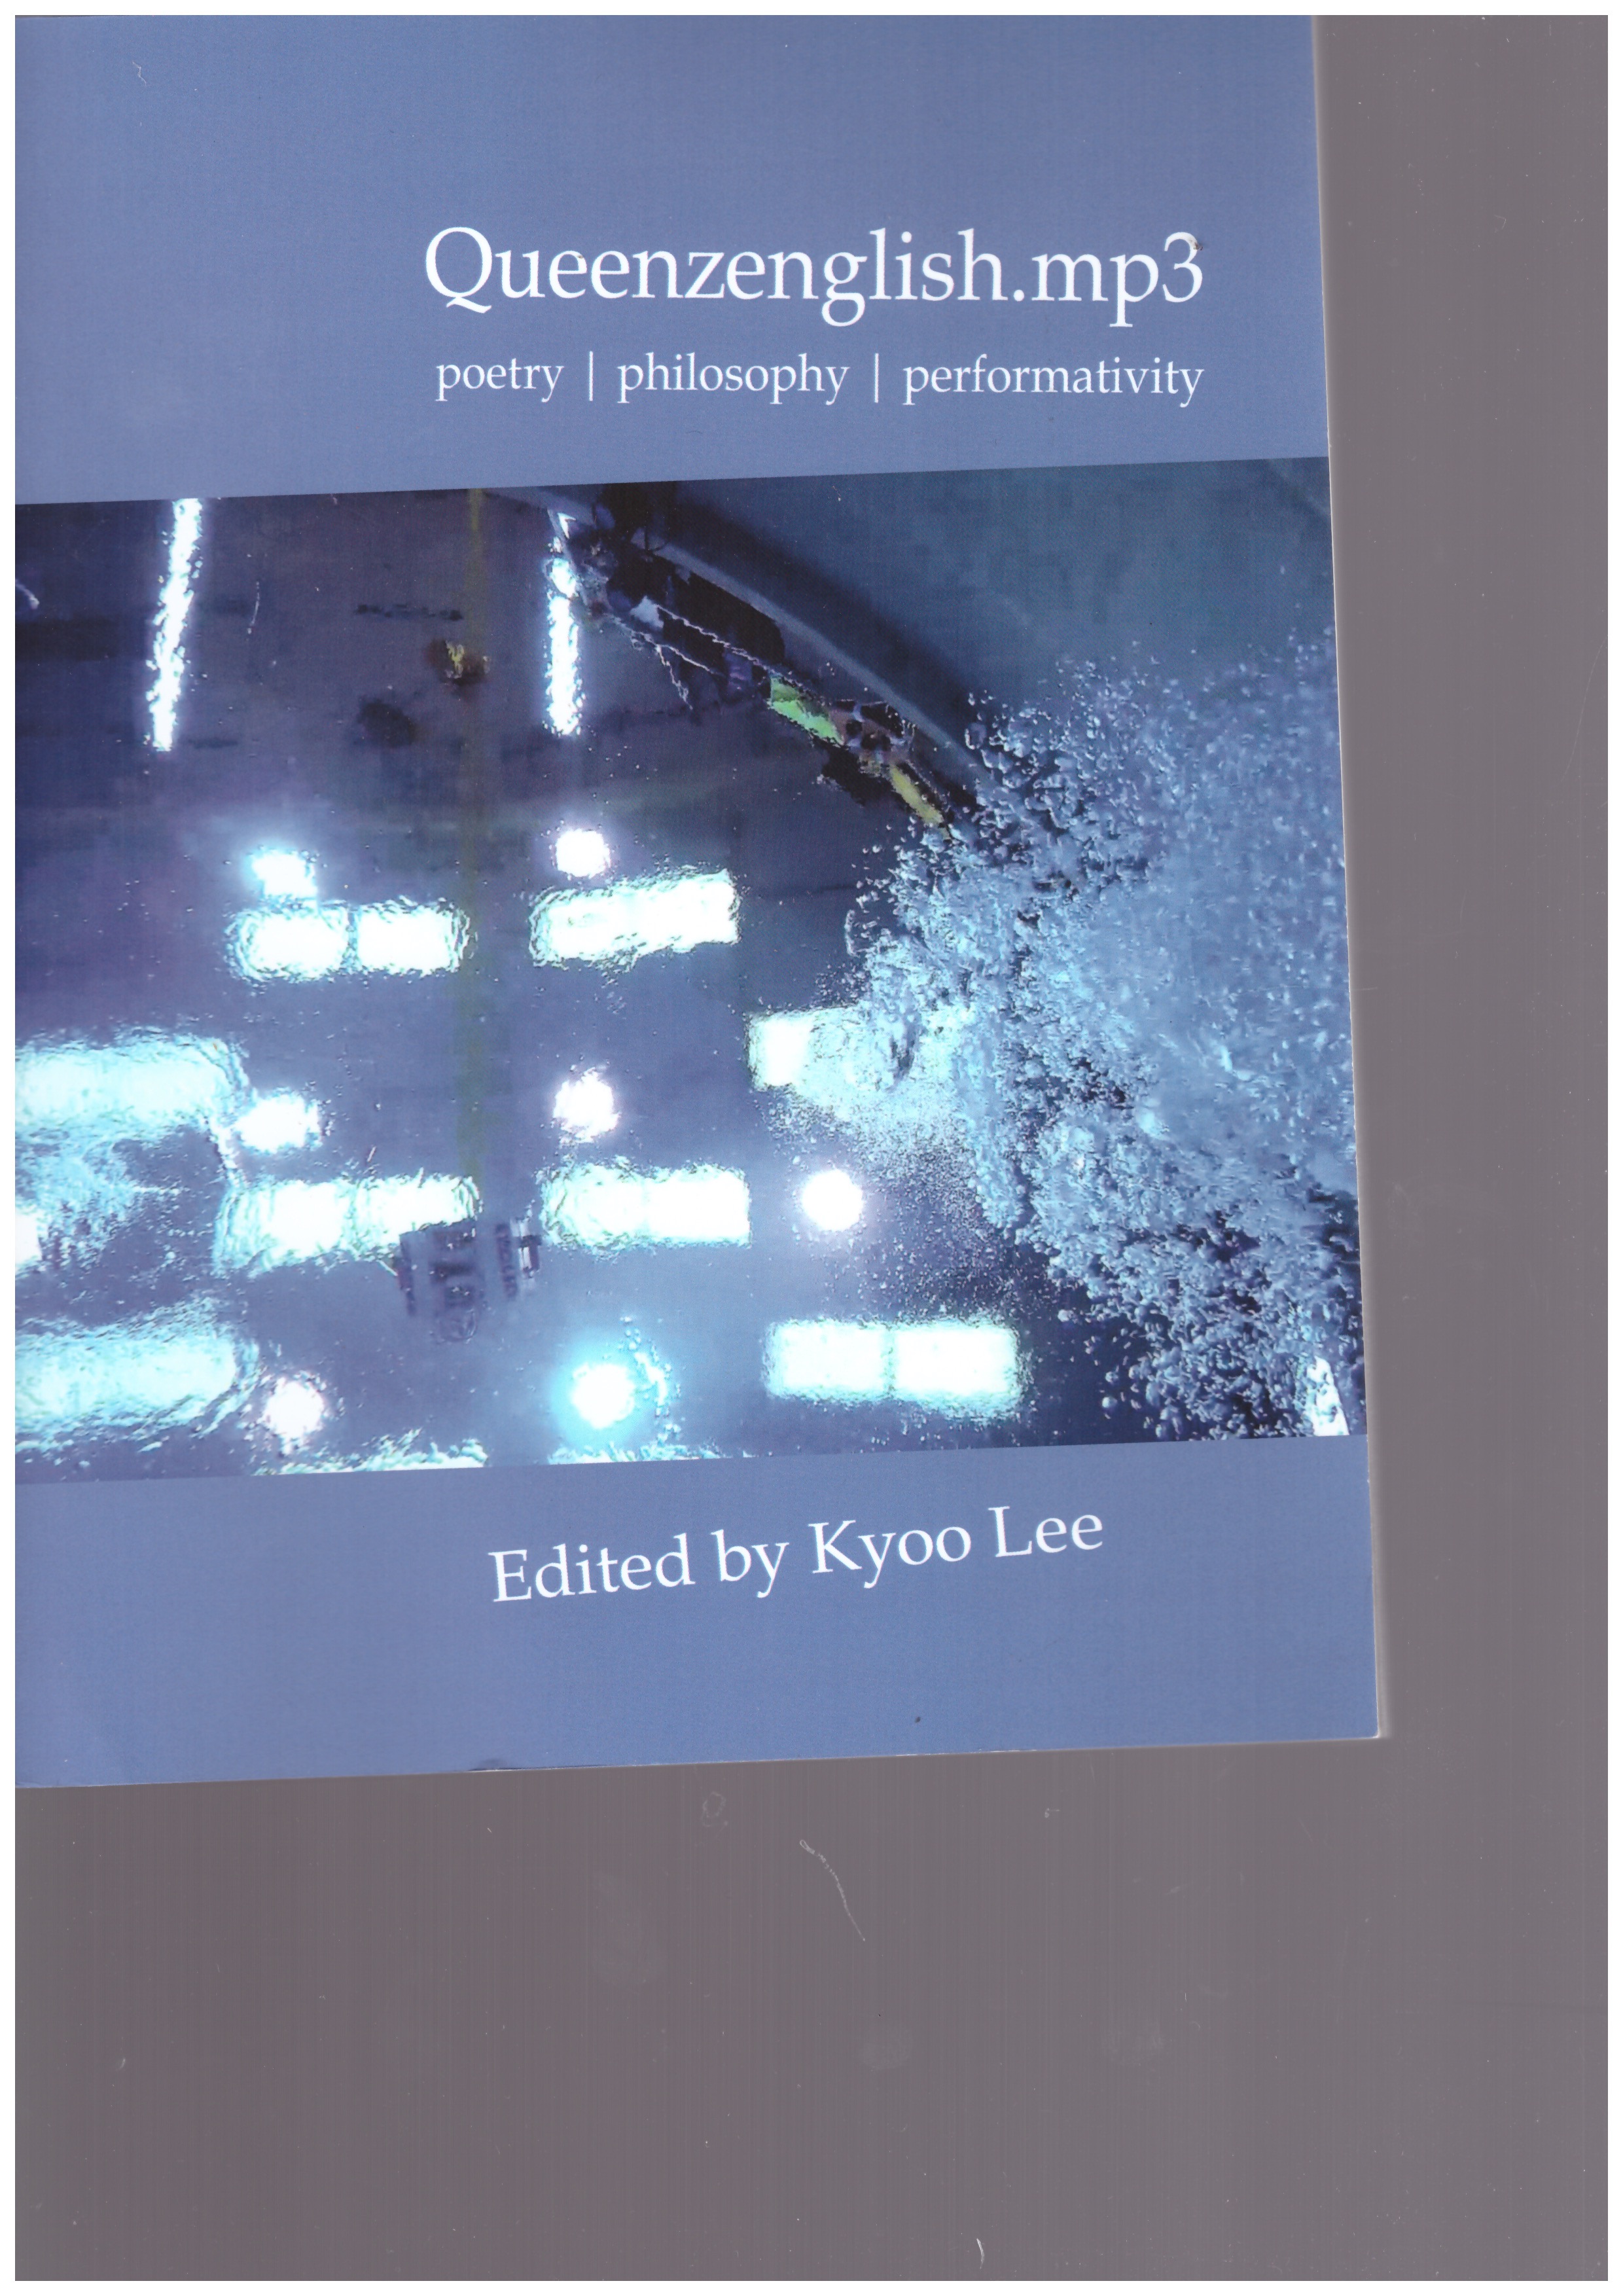 LEE, Kyoo Lee (ed.) - Queenzenglish.mp3: poetry | philosophy | performativity